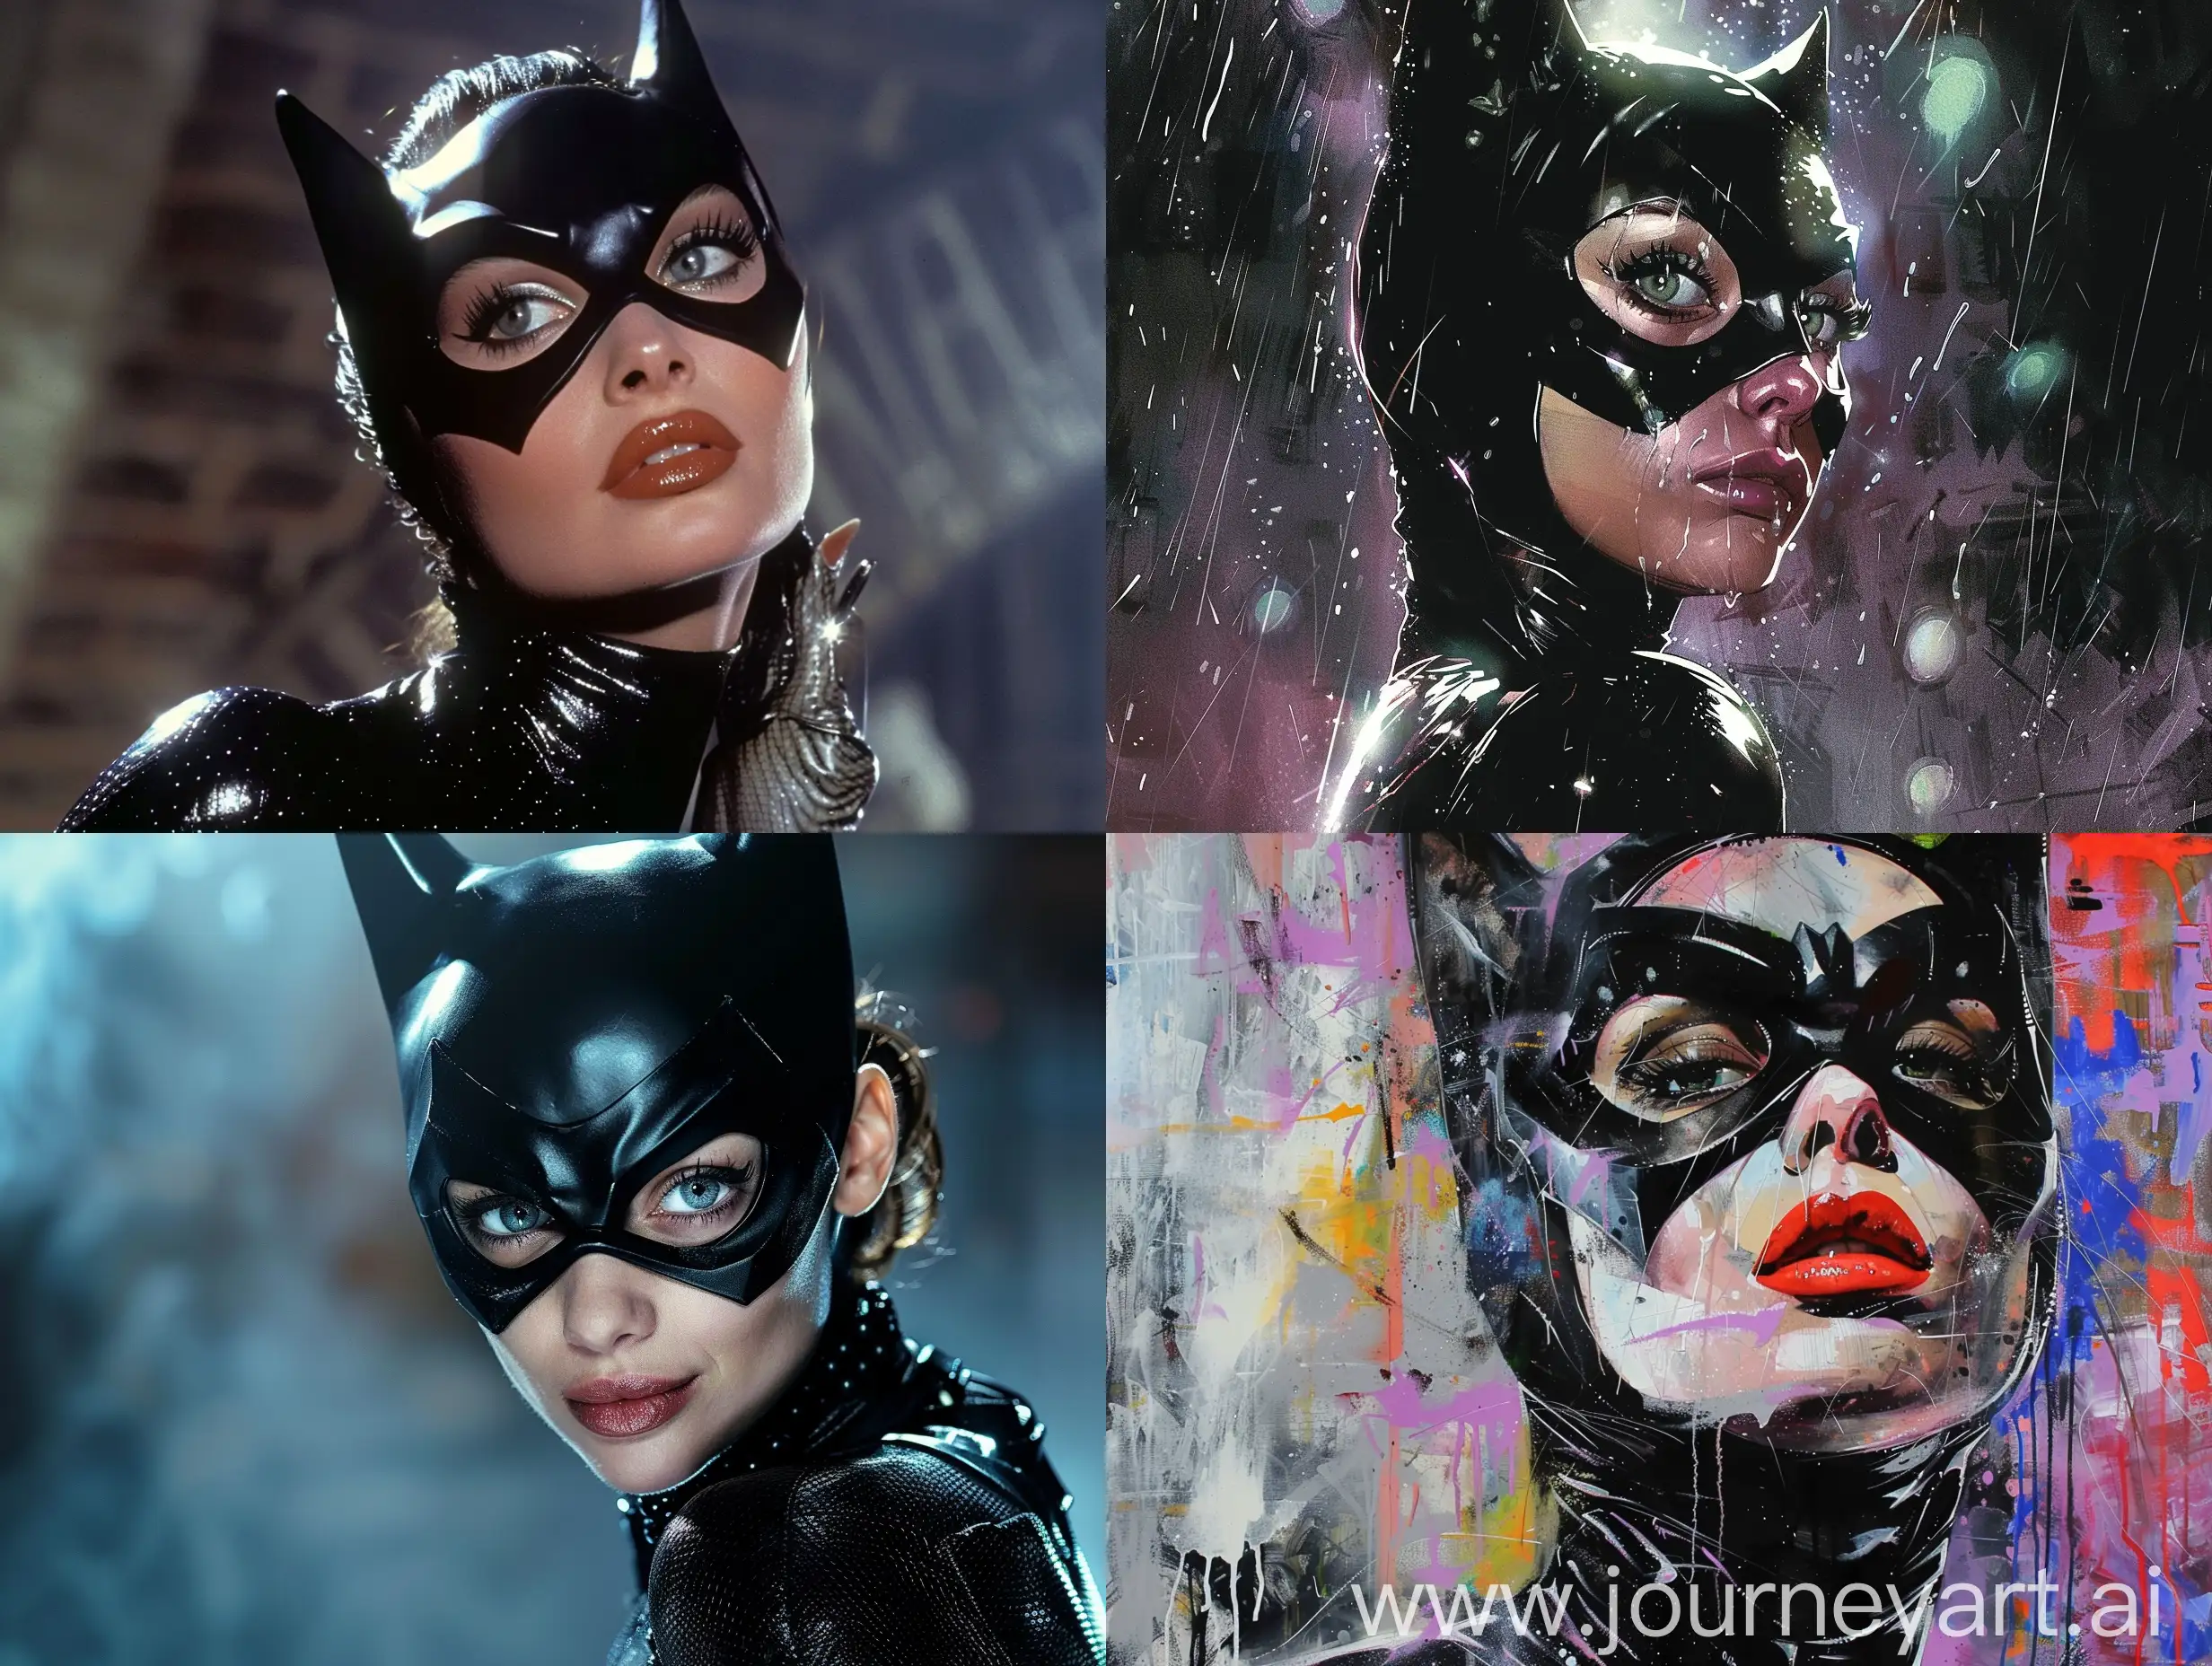 Sleek-Catwoman-in-Urban-Setting-Digital-Art